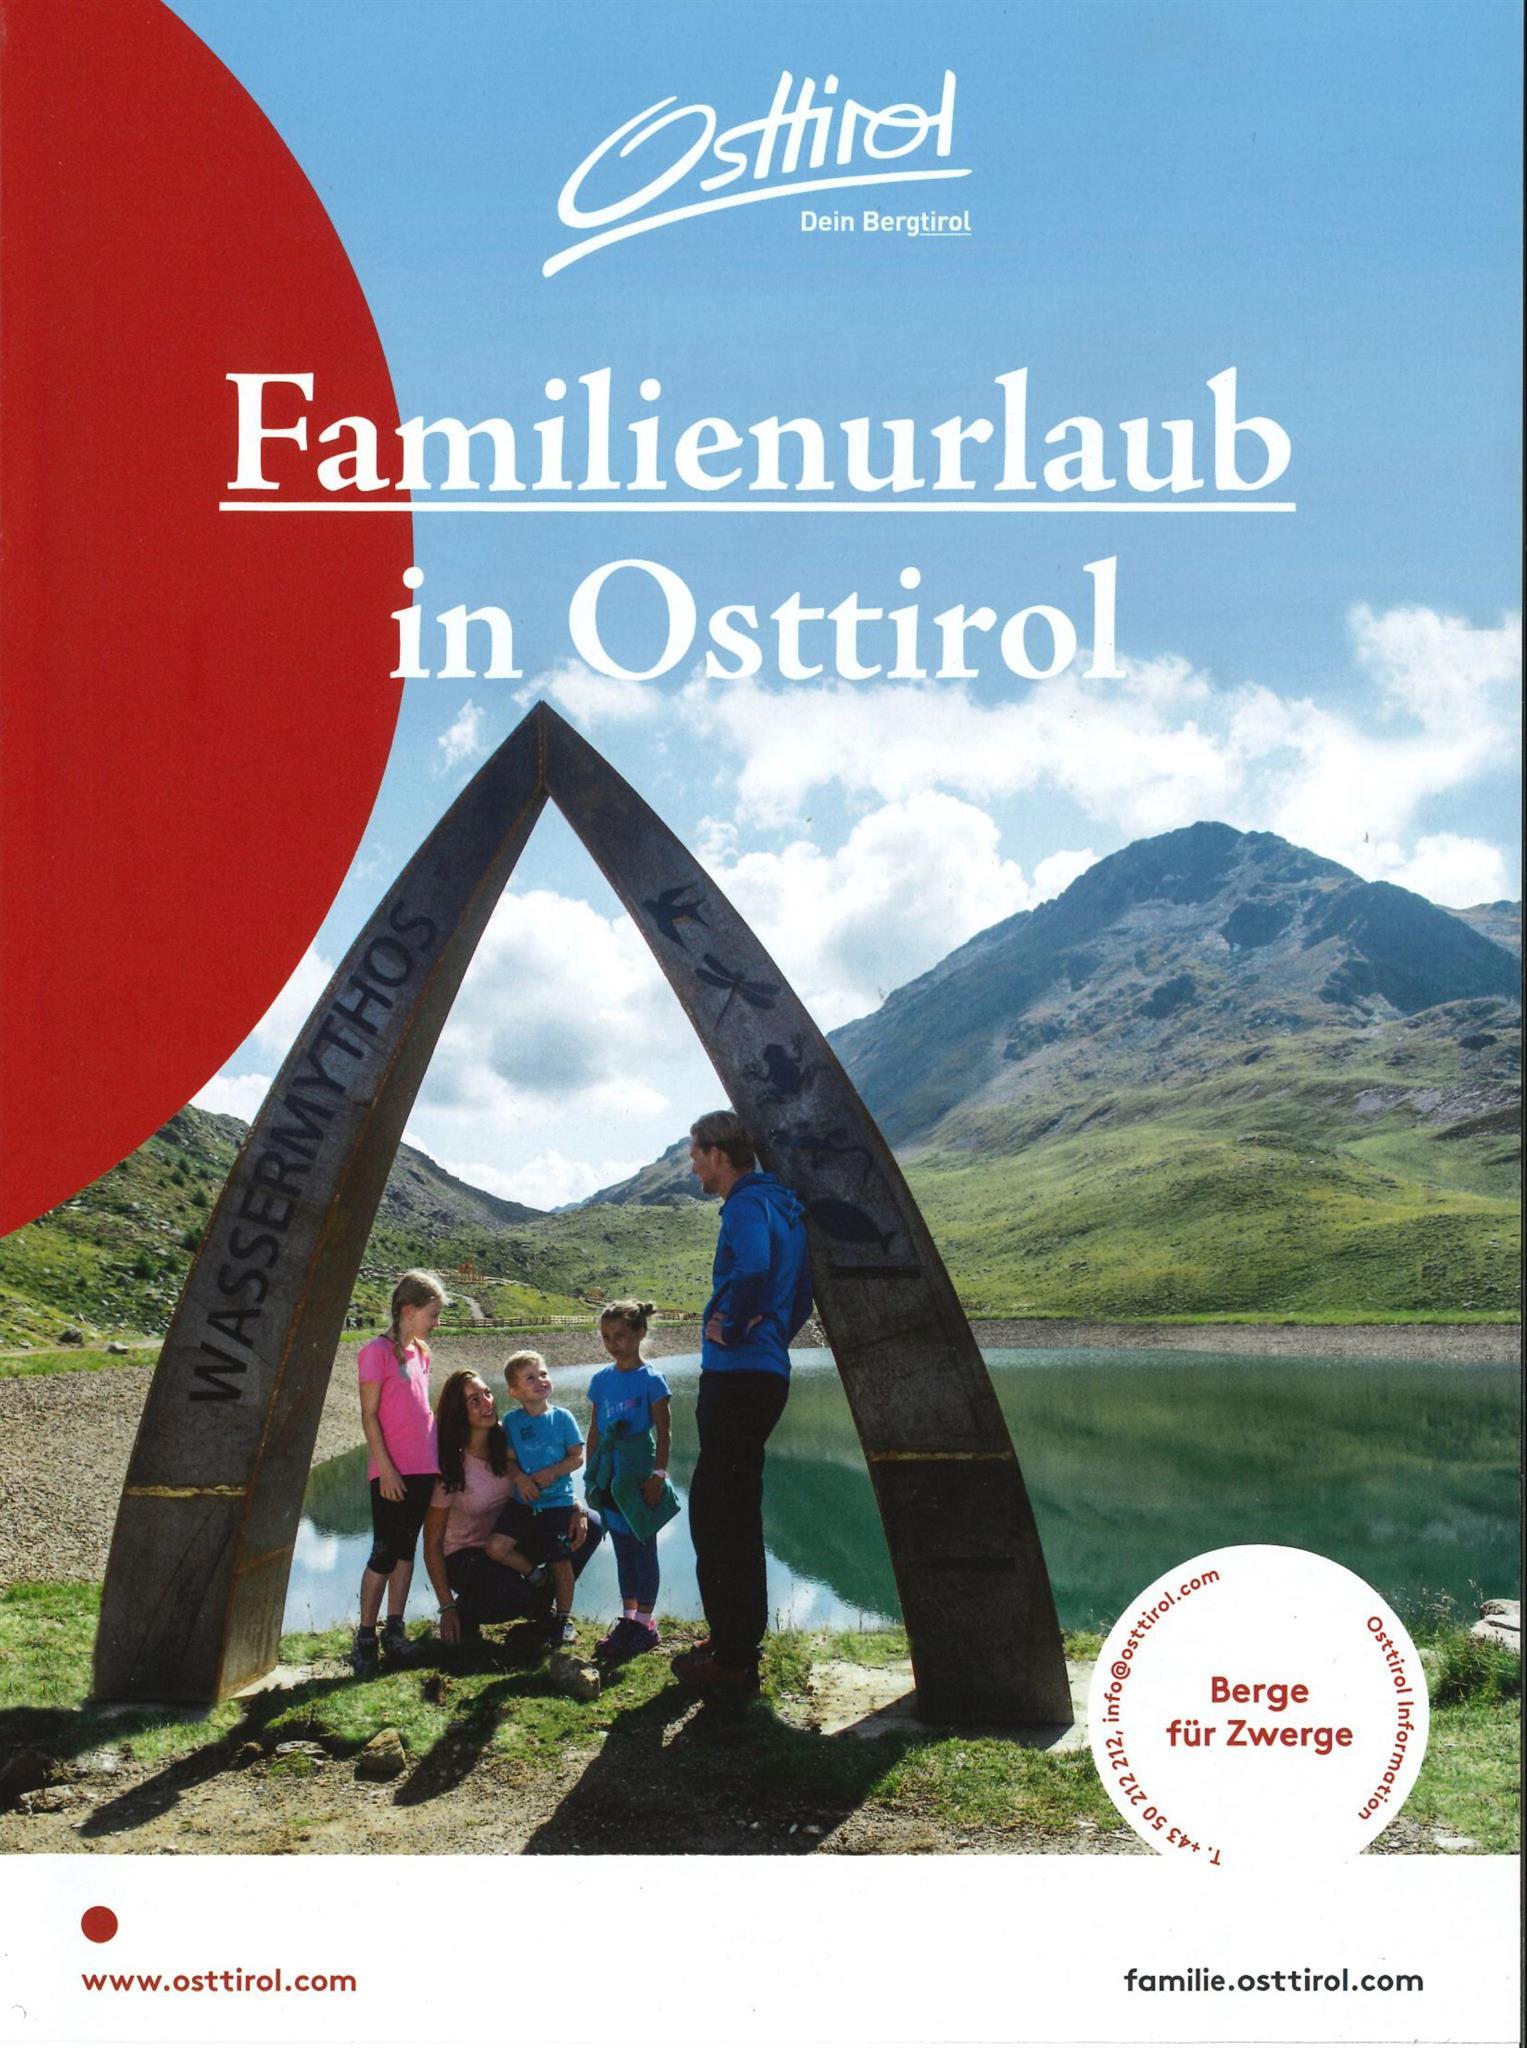 Familienurlaub-in-Osttirol.jpg